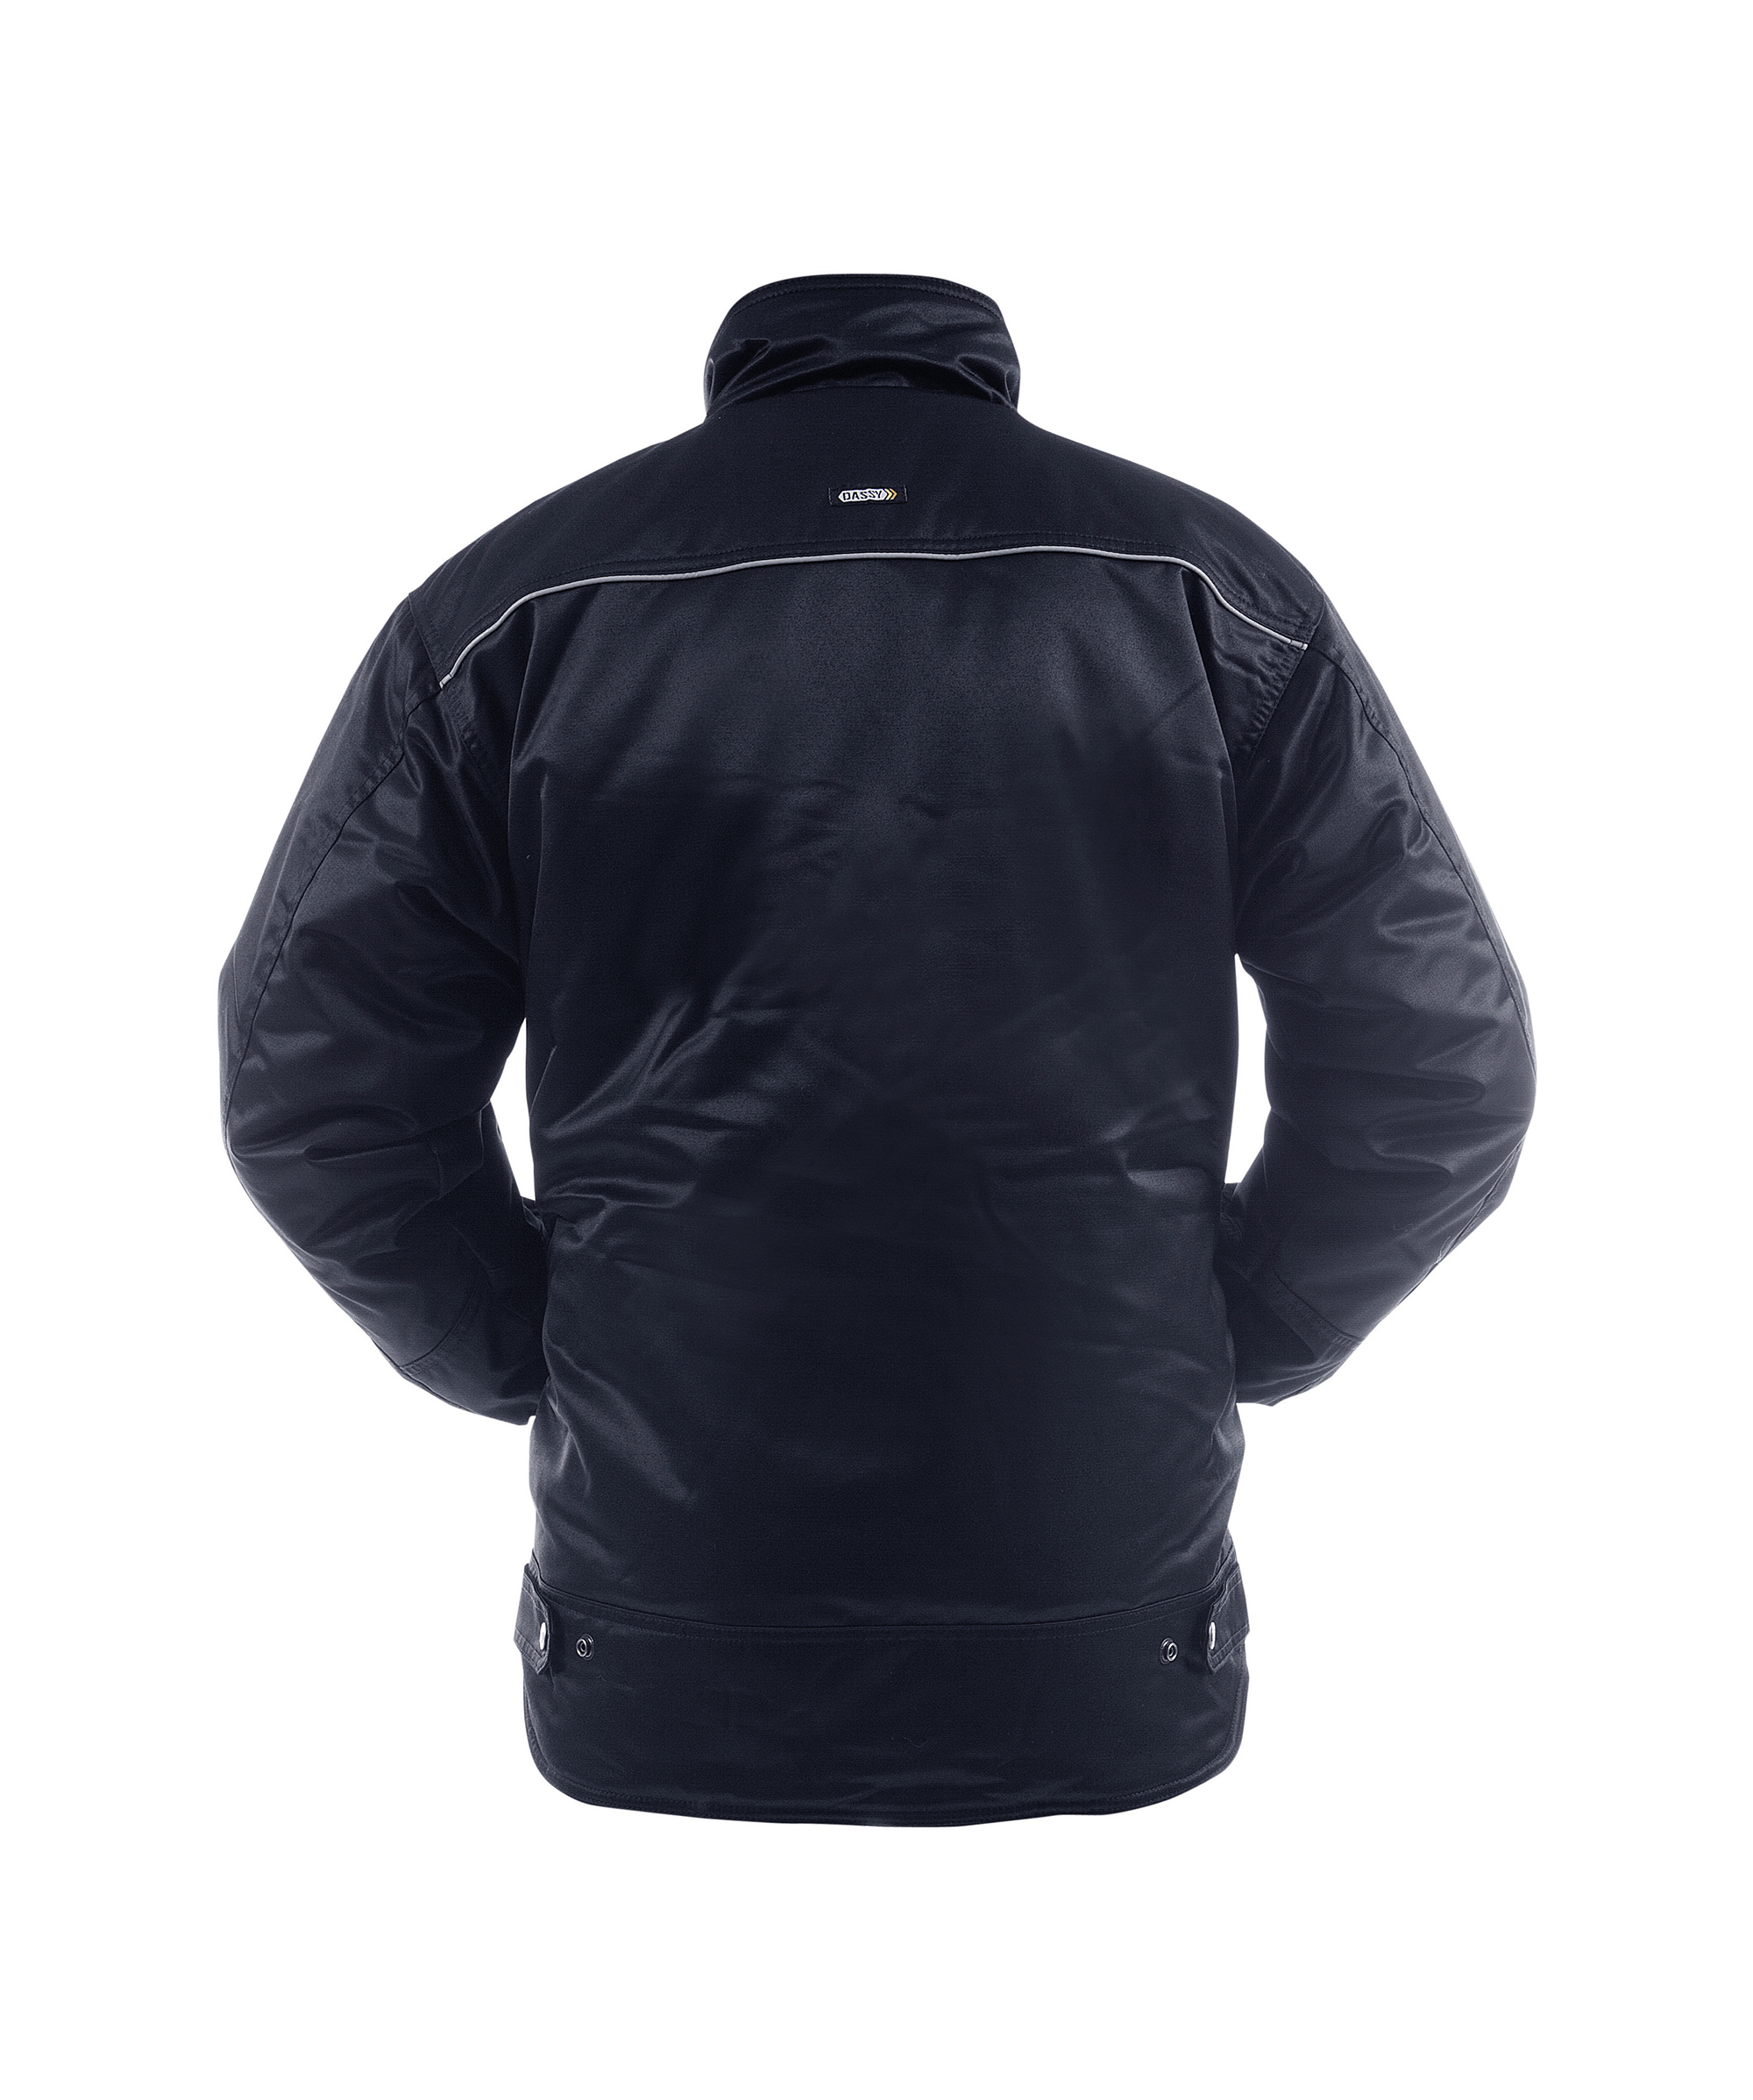 chatel_beaver-winter-jacket_navy_back.jpg